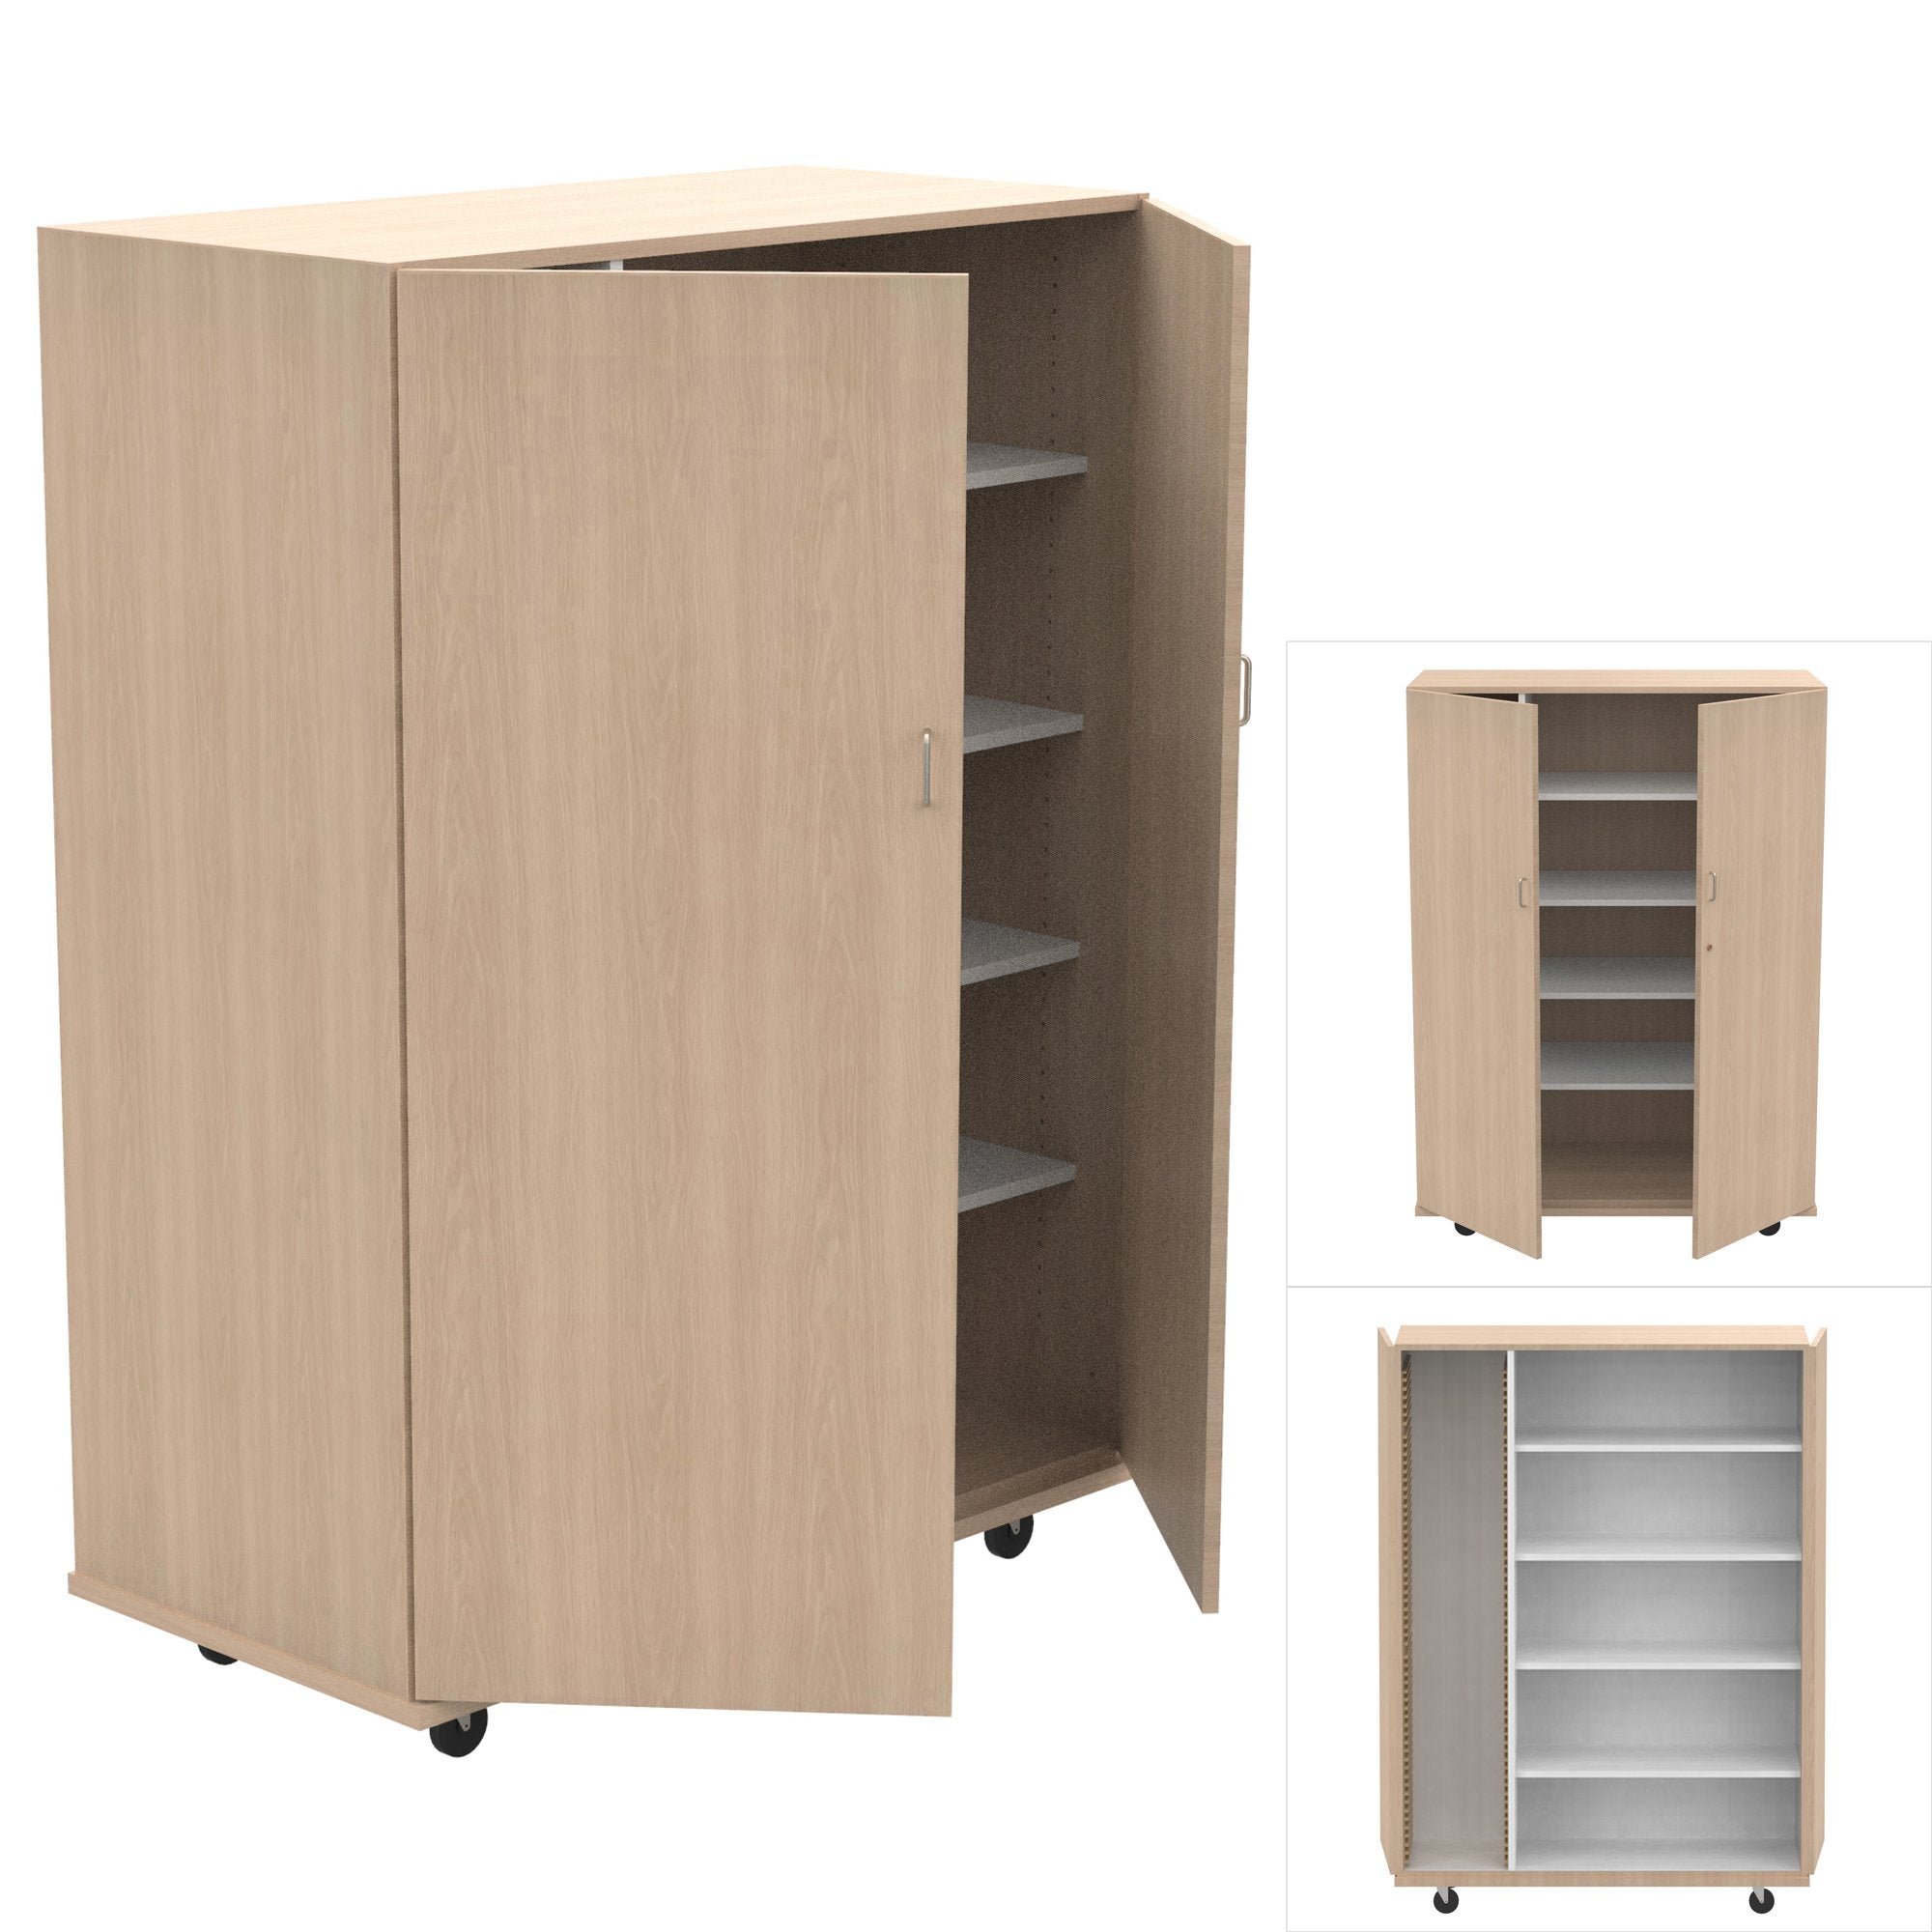 Wardrobe and Storage Cabinets